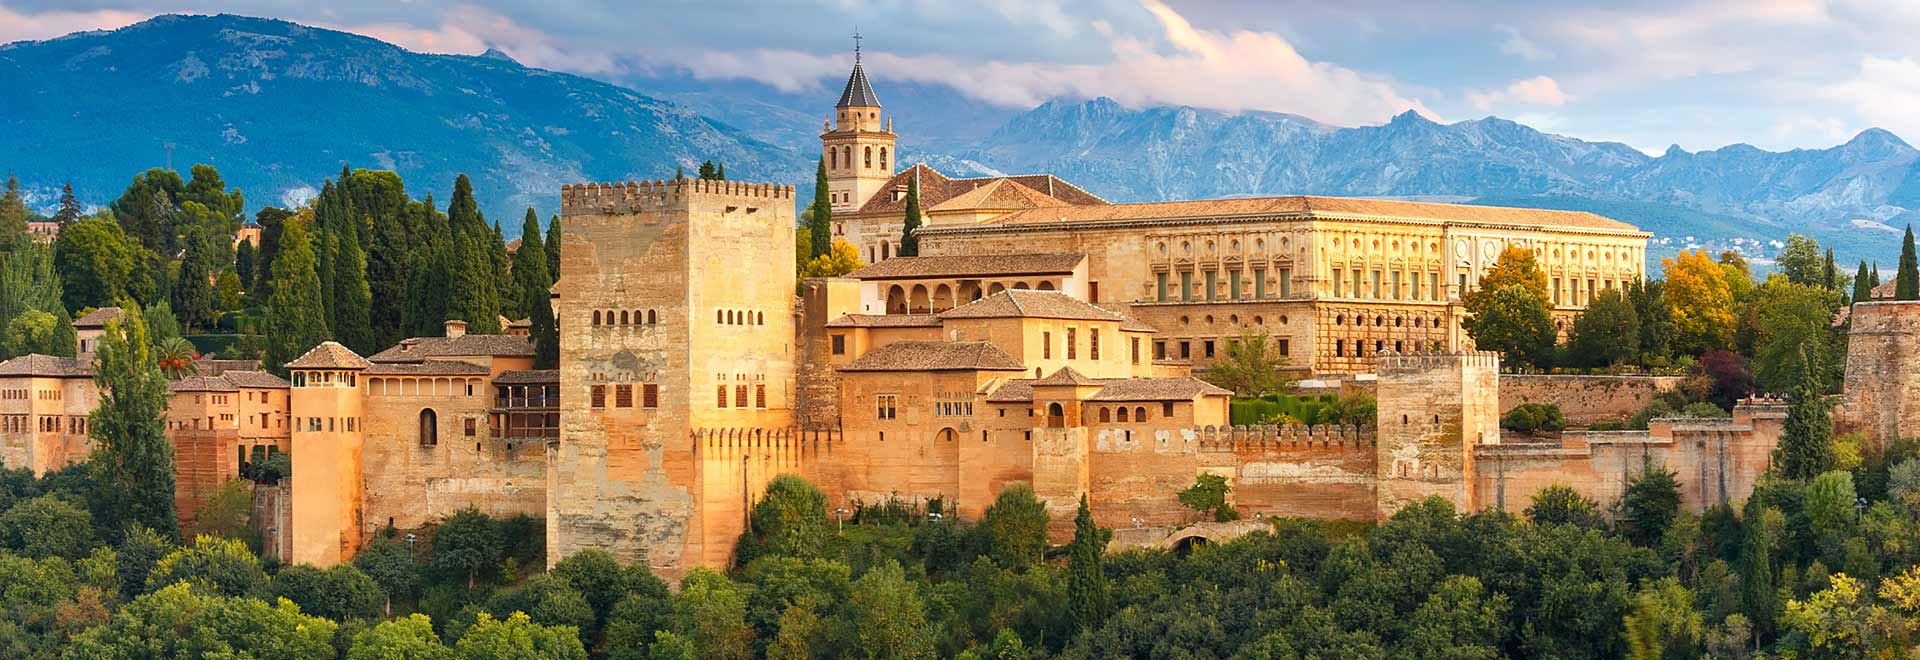 Europe Spain Granada Alhambra Palace